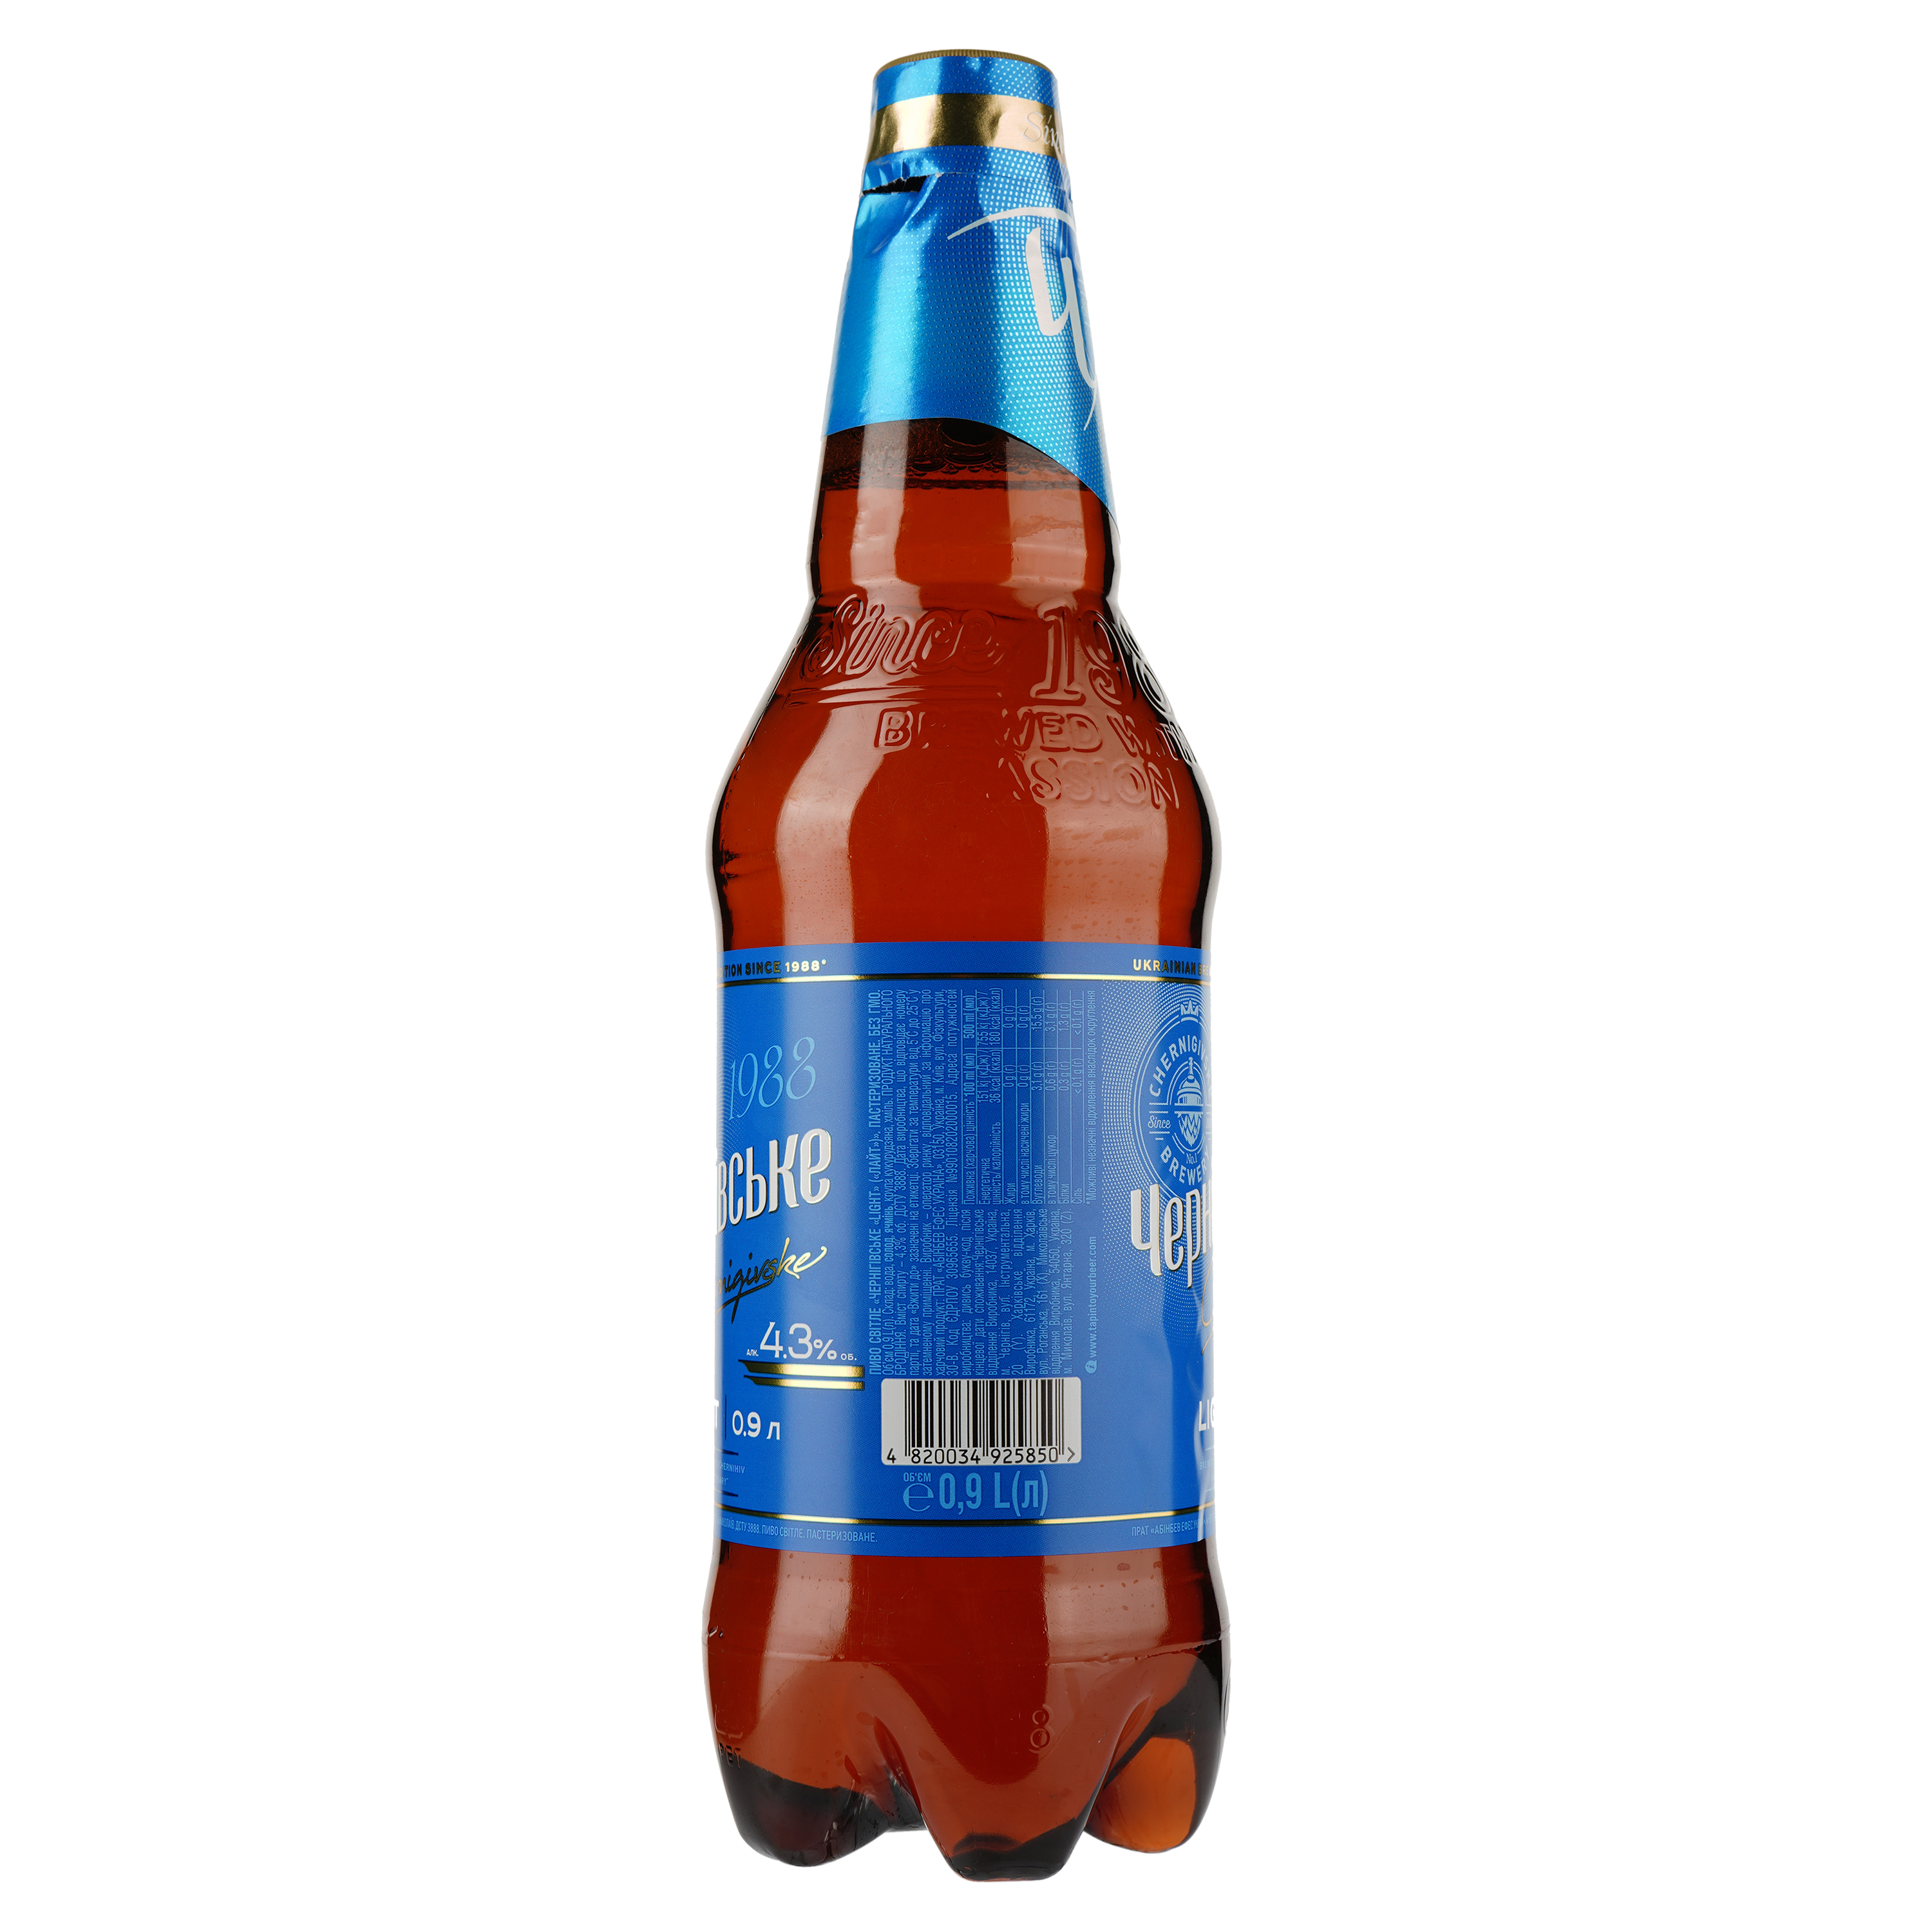 Пиво Чернігівське Light, светлое, 4,3%, 0,9 л - фото 2